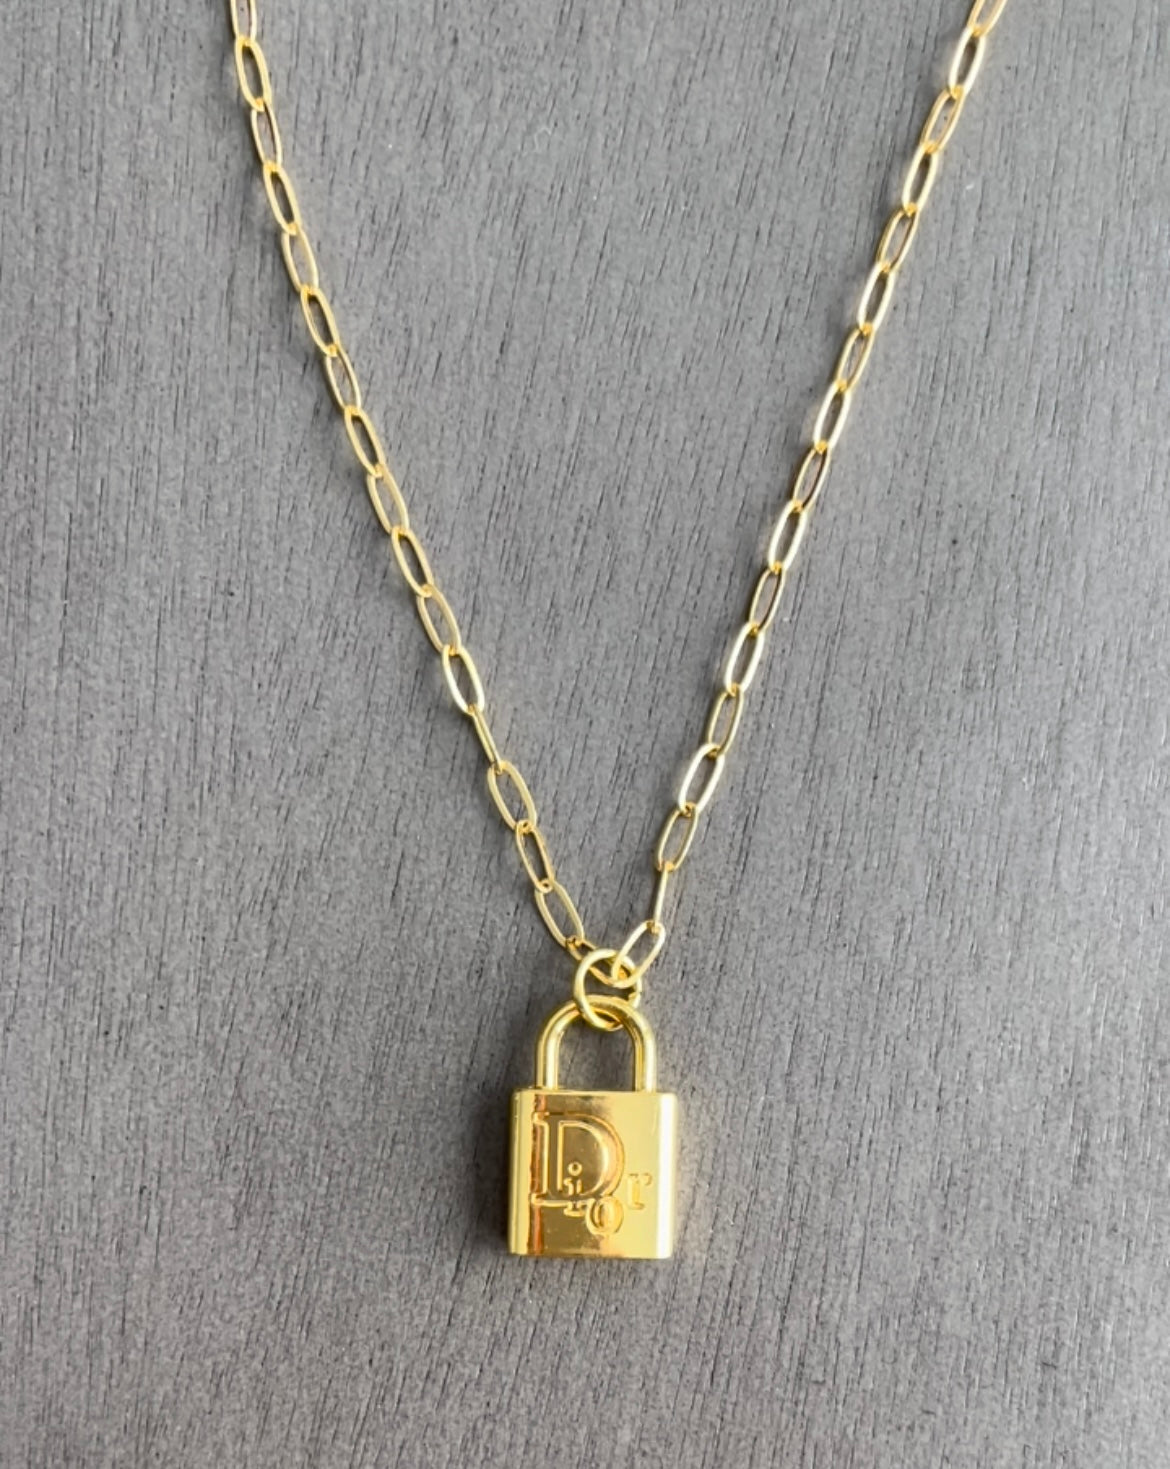 Upcycled Designer Christian Dior Lock Pendant Necklace